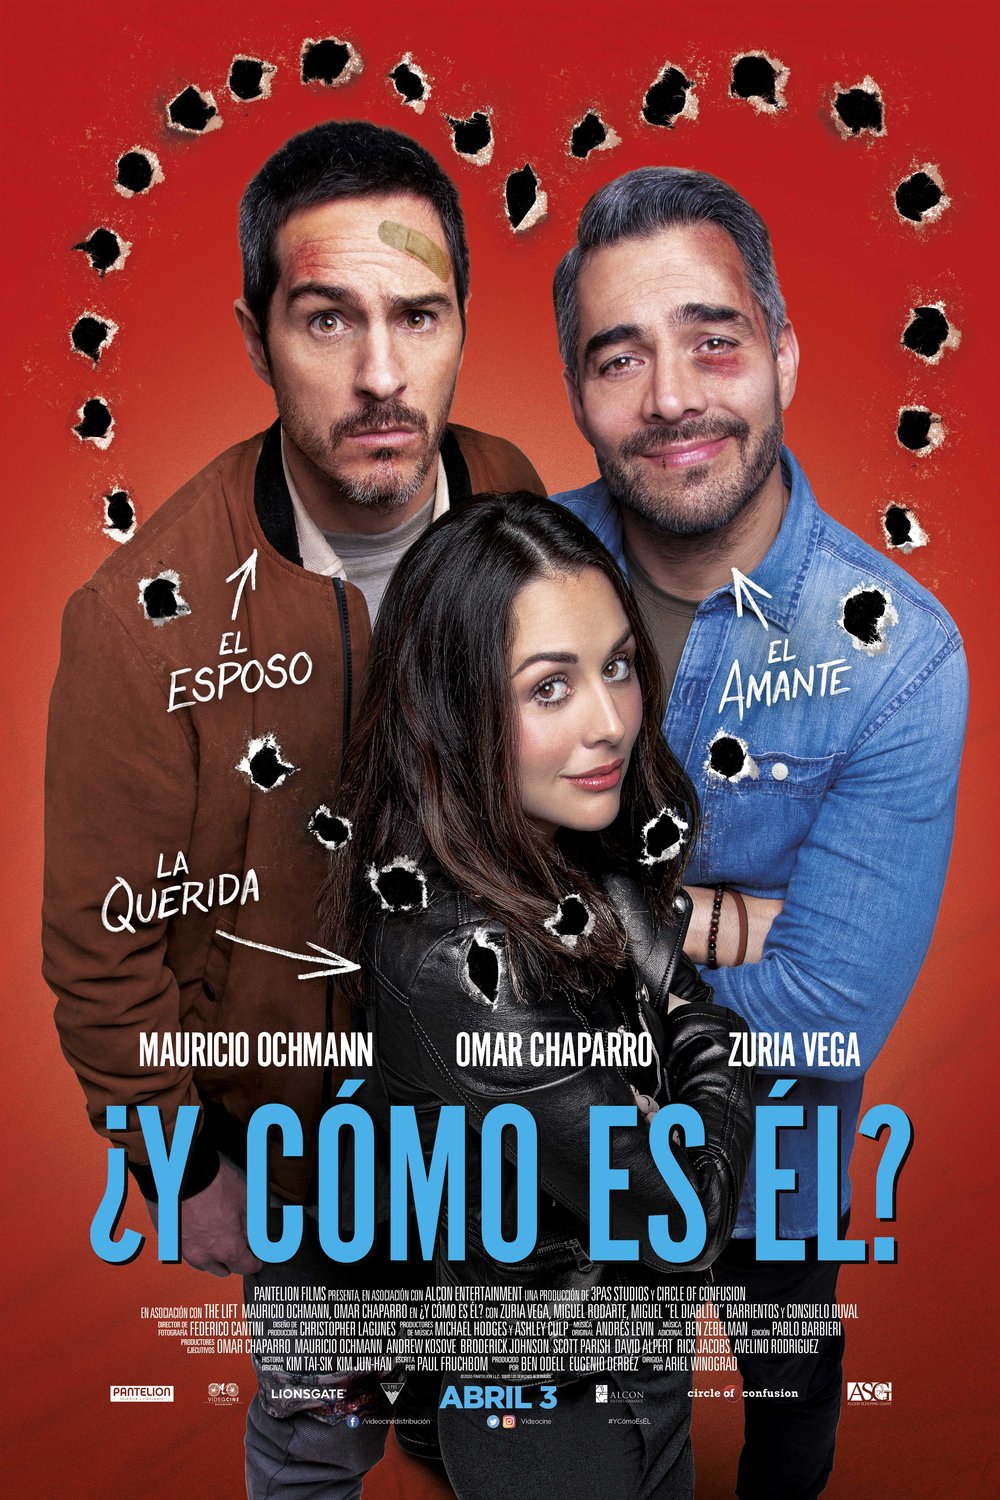 L'affiche originale du film Backseat Driver en espagnol